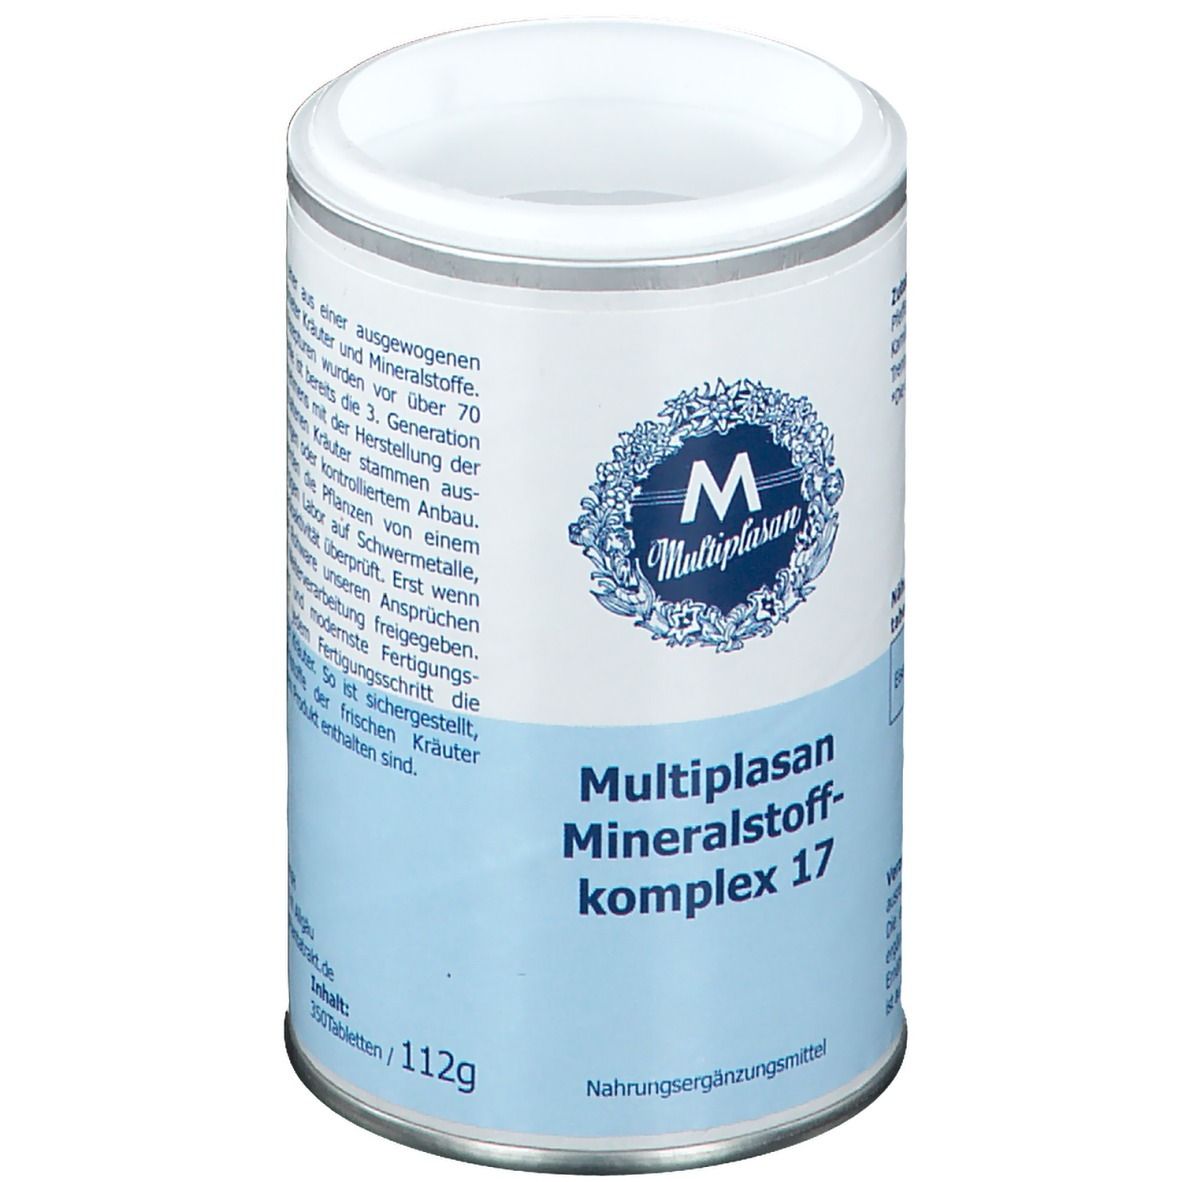 Multiplasan Mineralstoffkomplex 17